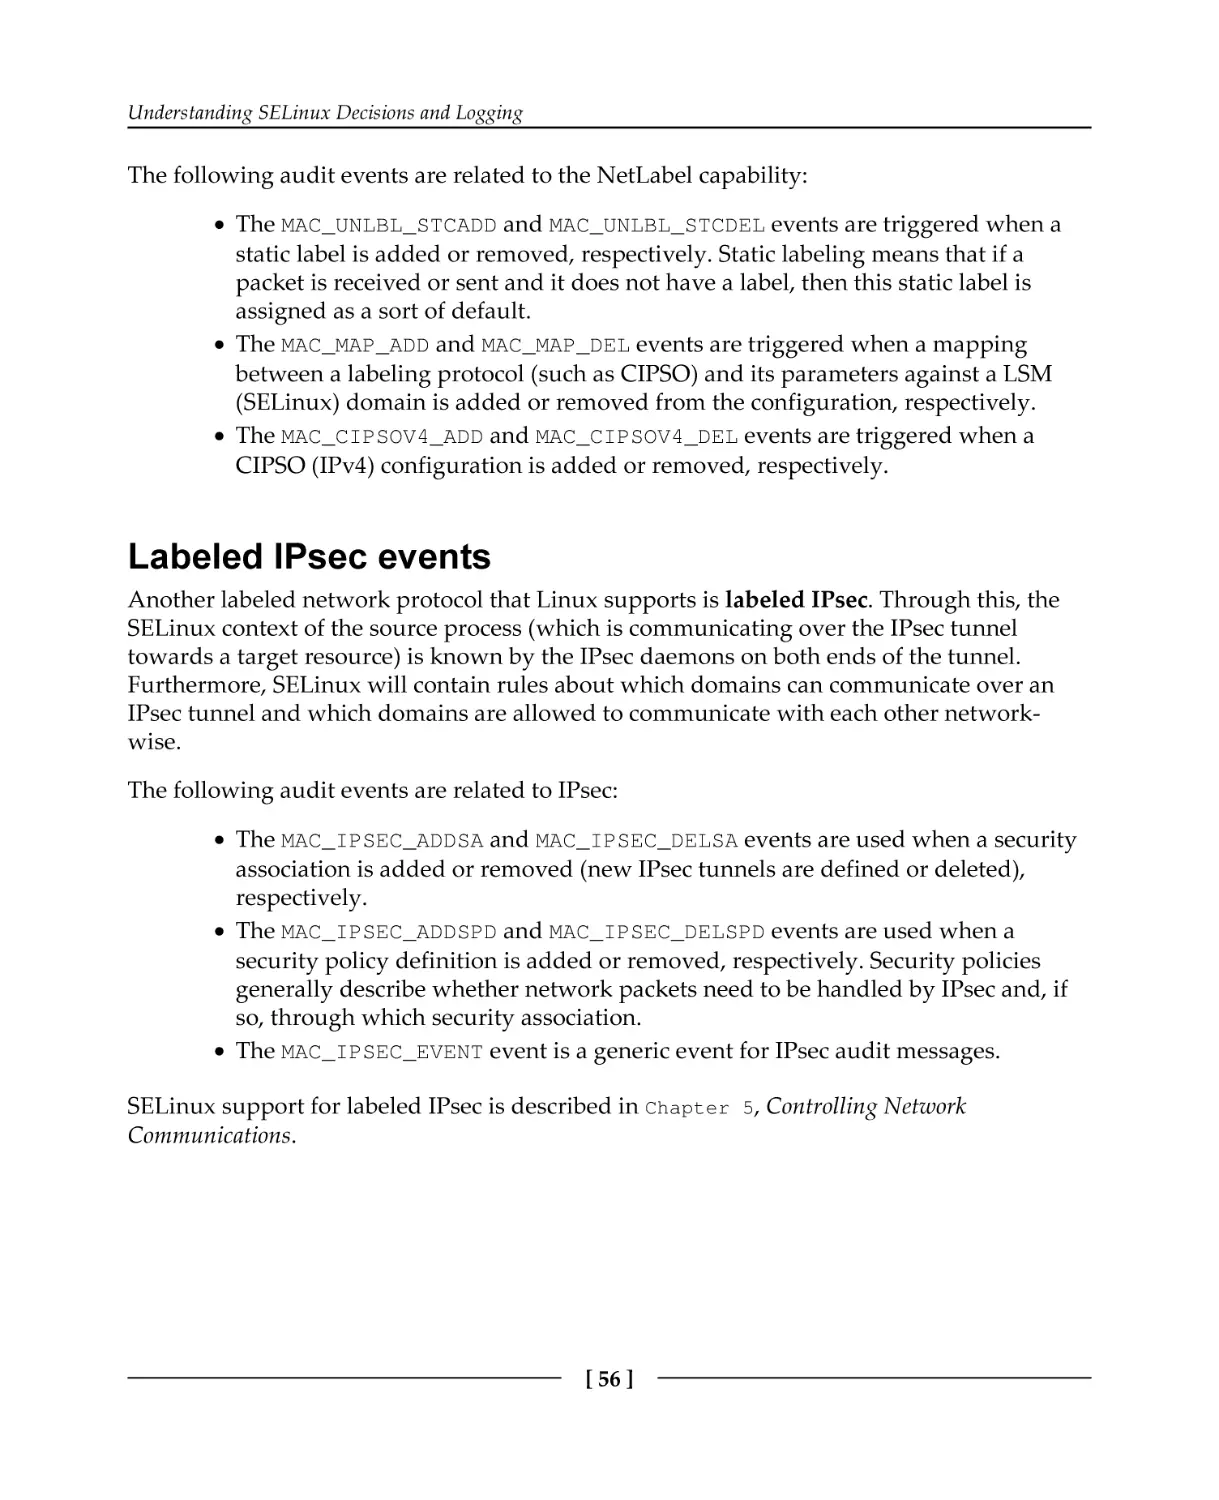 Labeled IPsec events